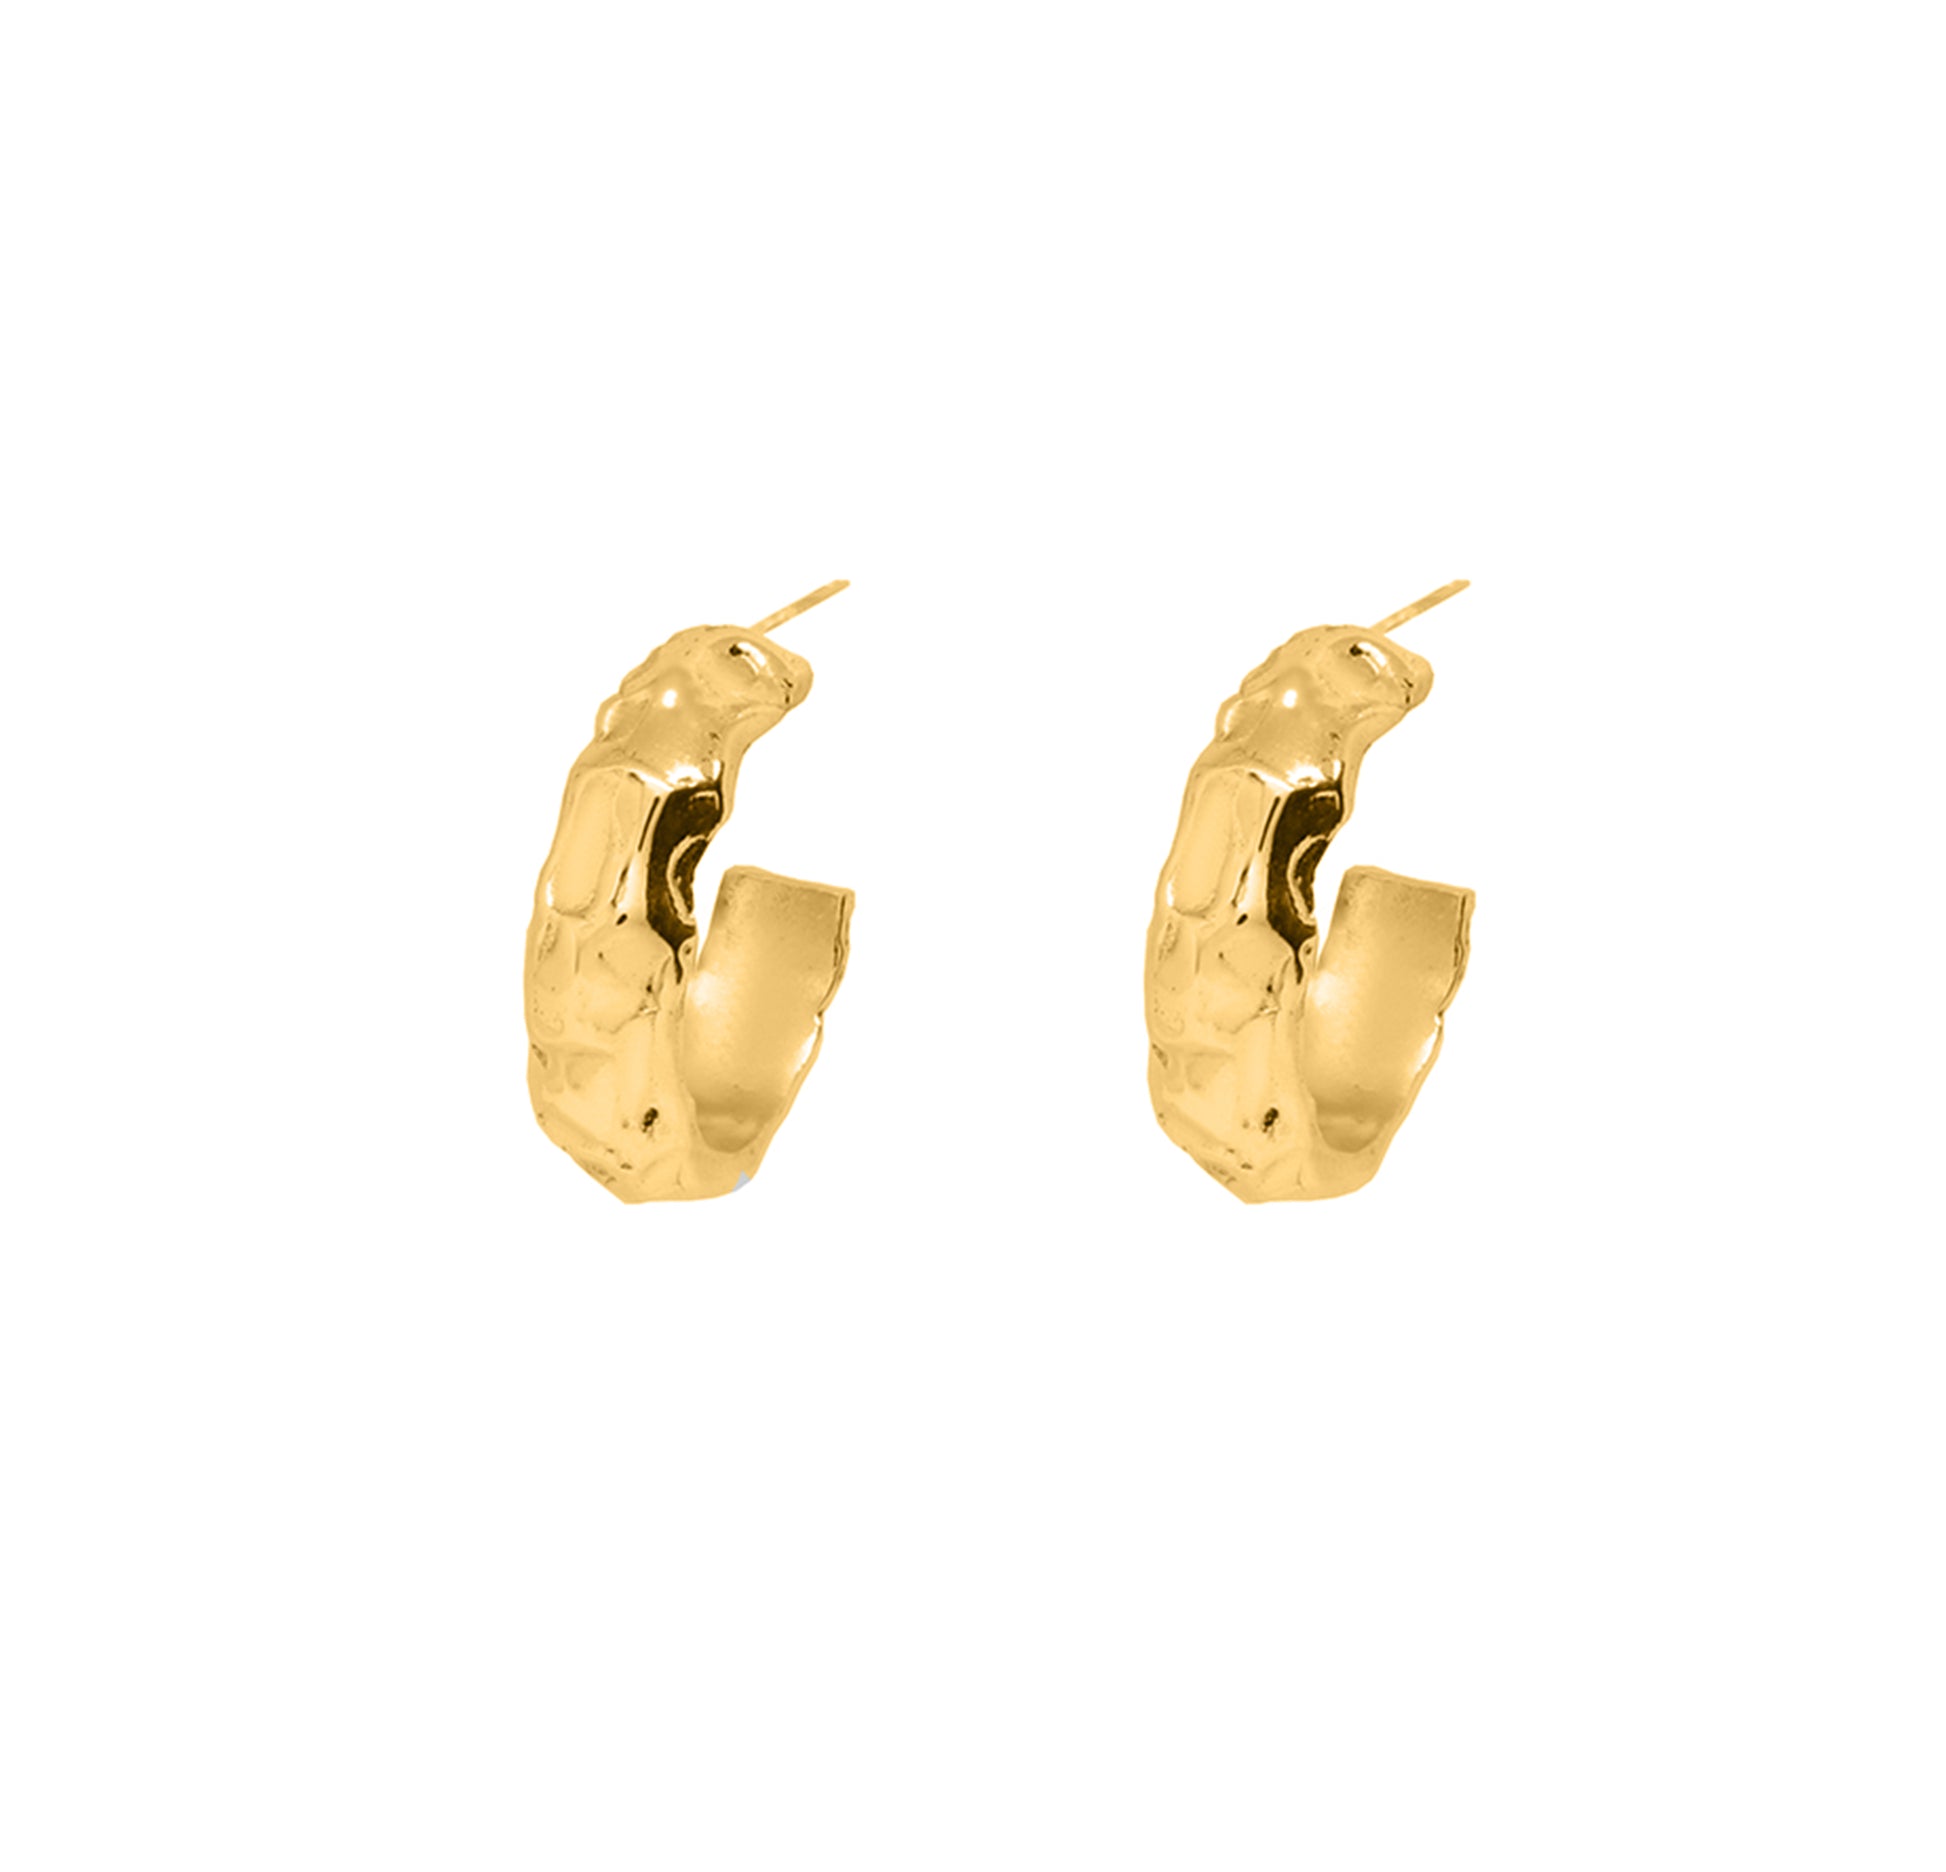 earrings ocean organic design jewellery jewelry gold silver handmade orecchini gioielli artigianali argento oro marea joias prata ouro